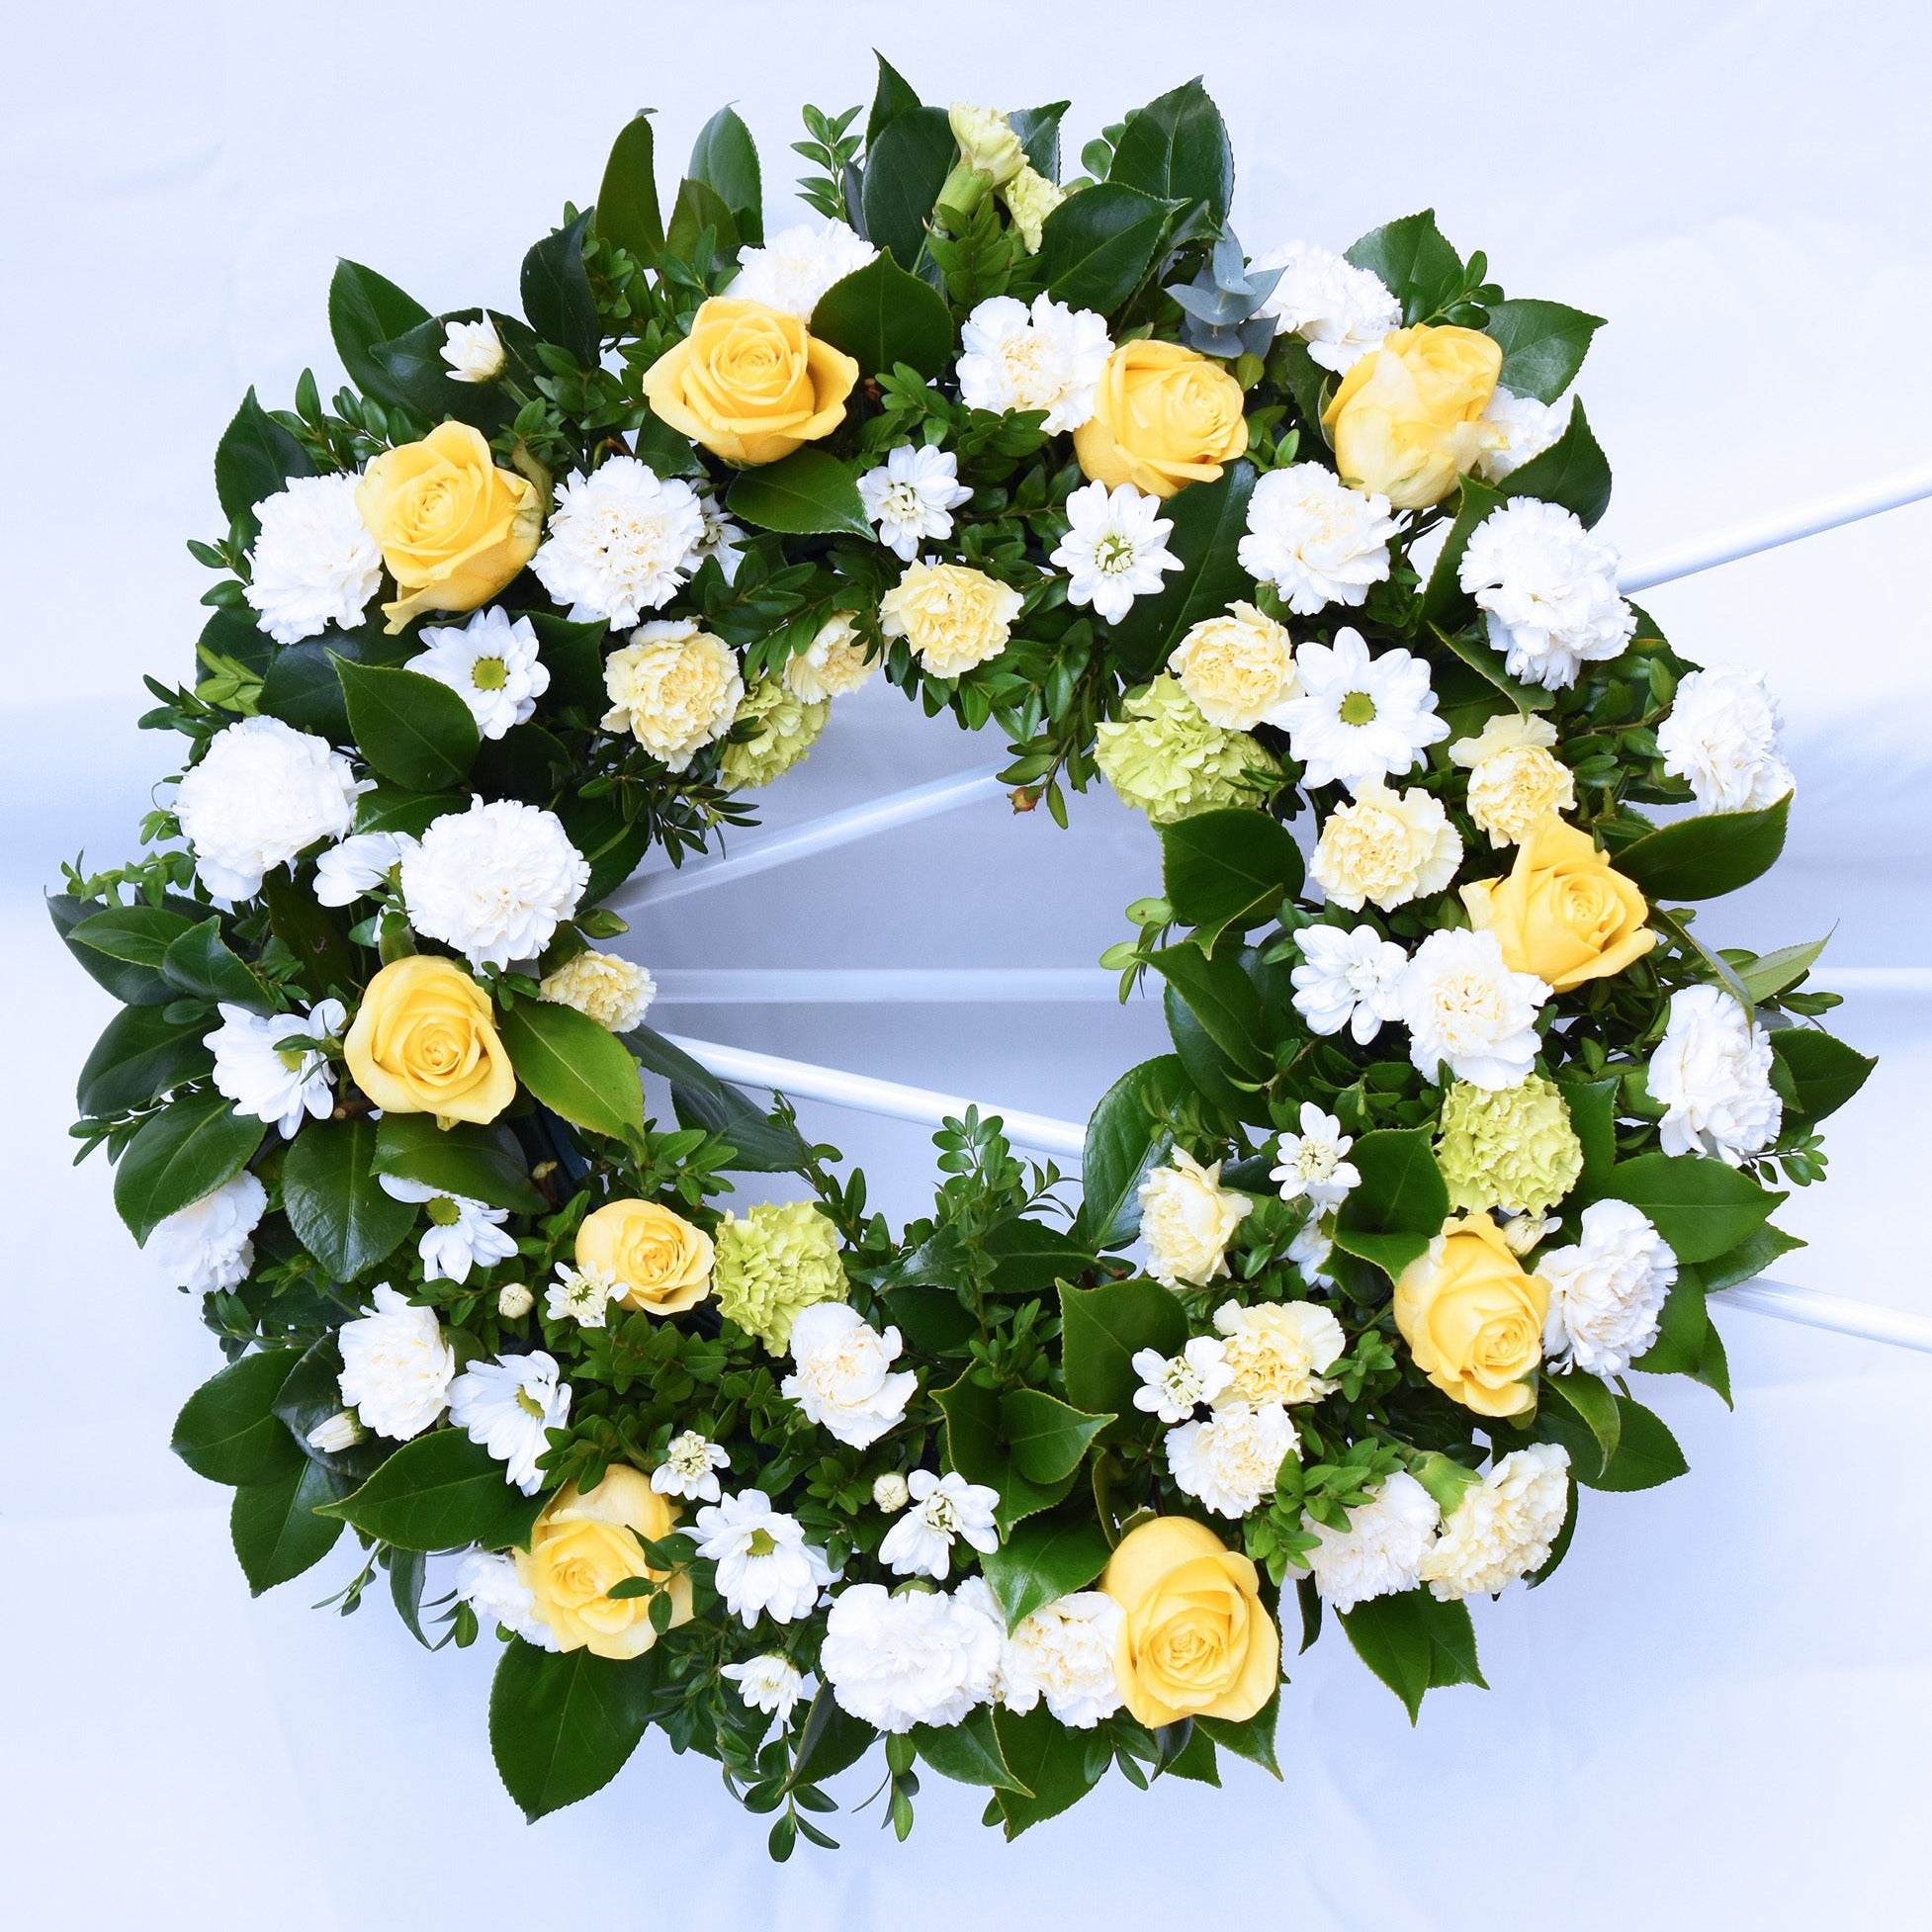 Lemon Cheesecake Funeral Flower Wreath